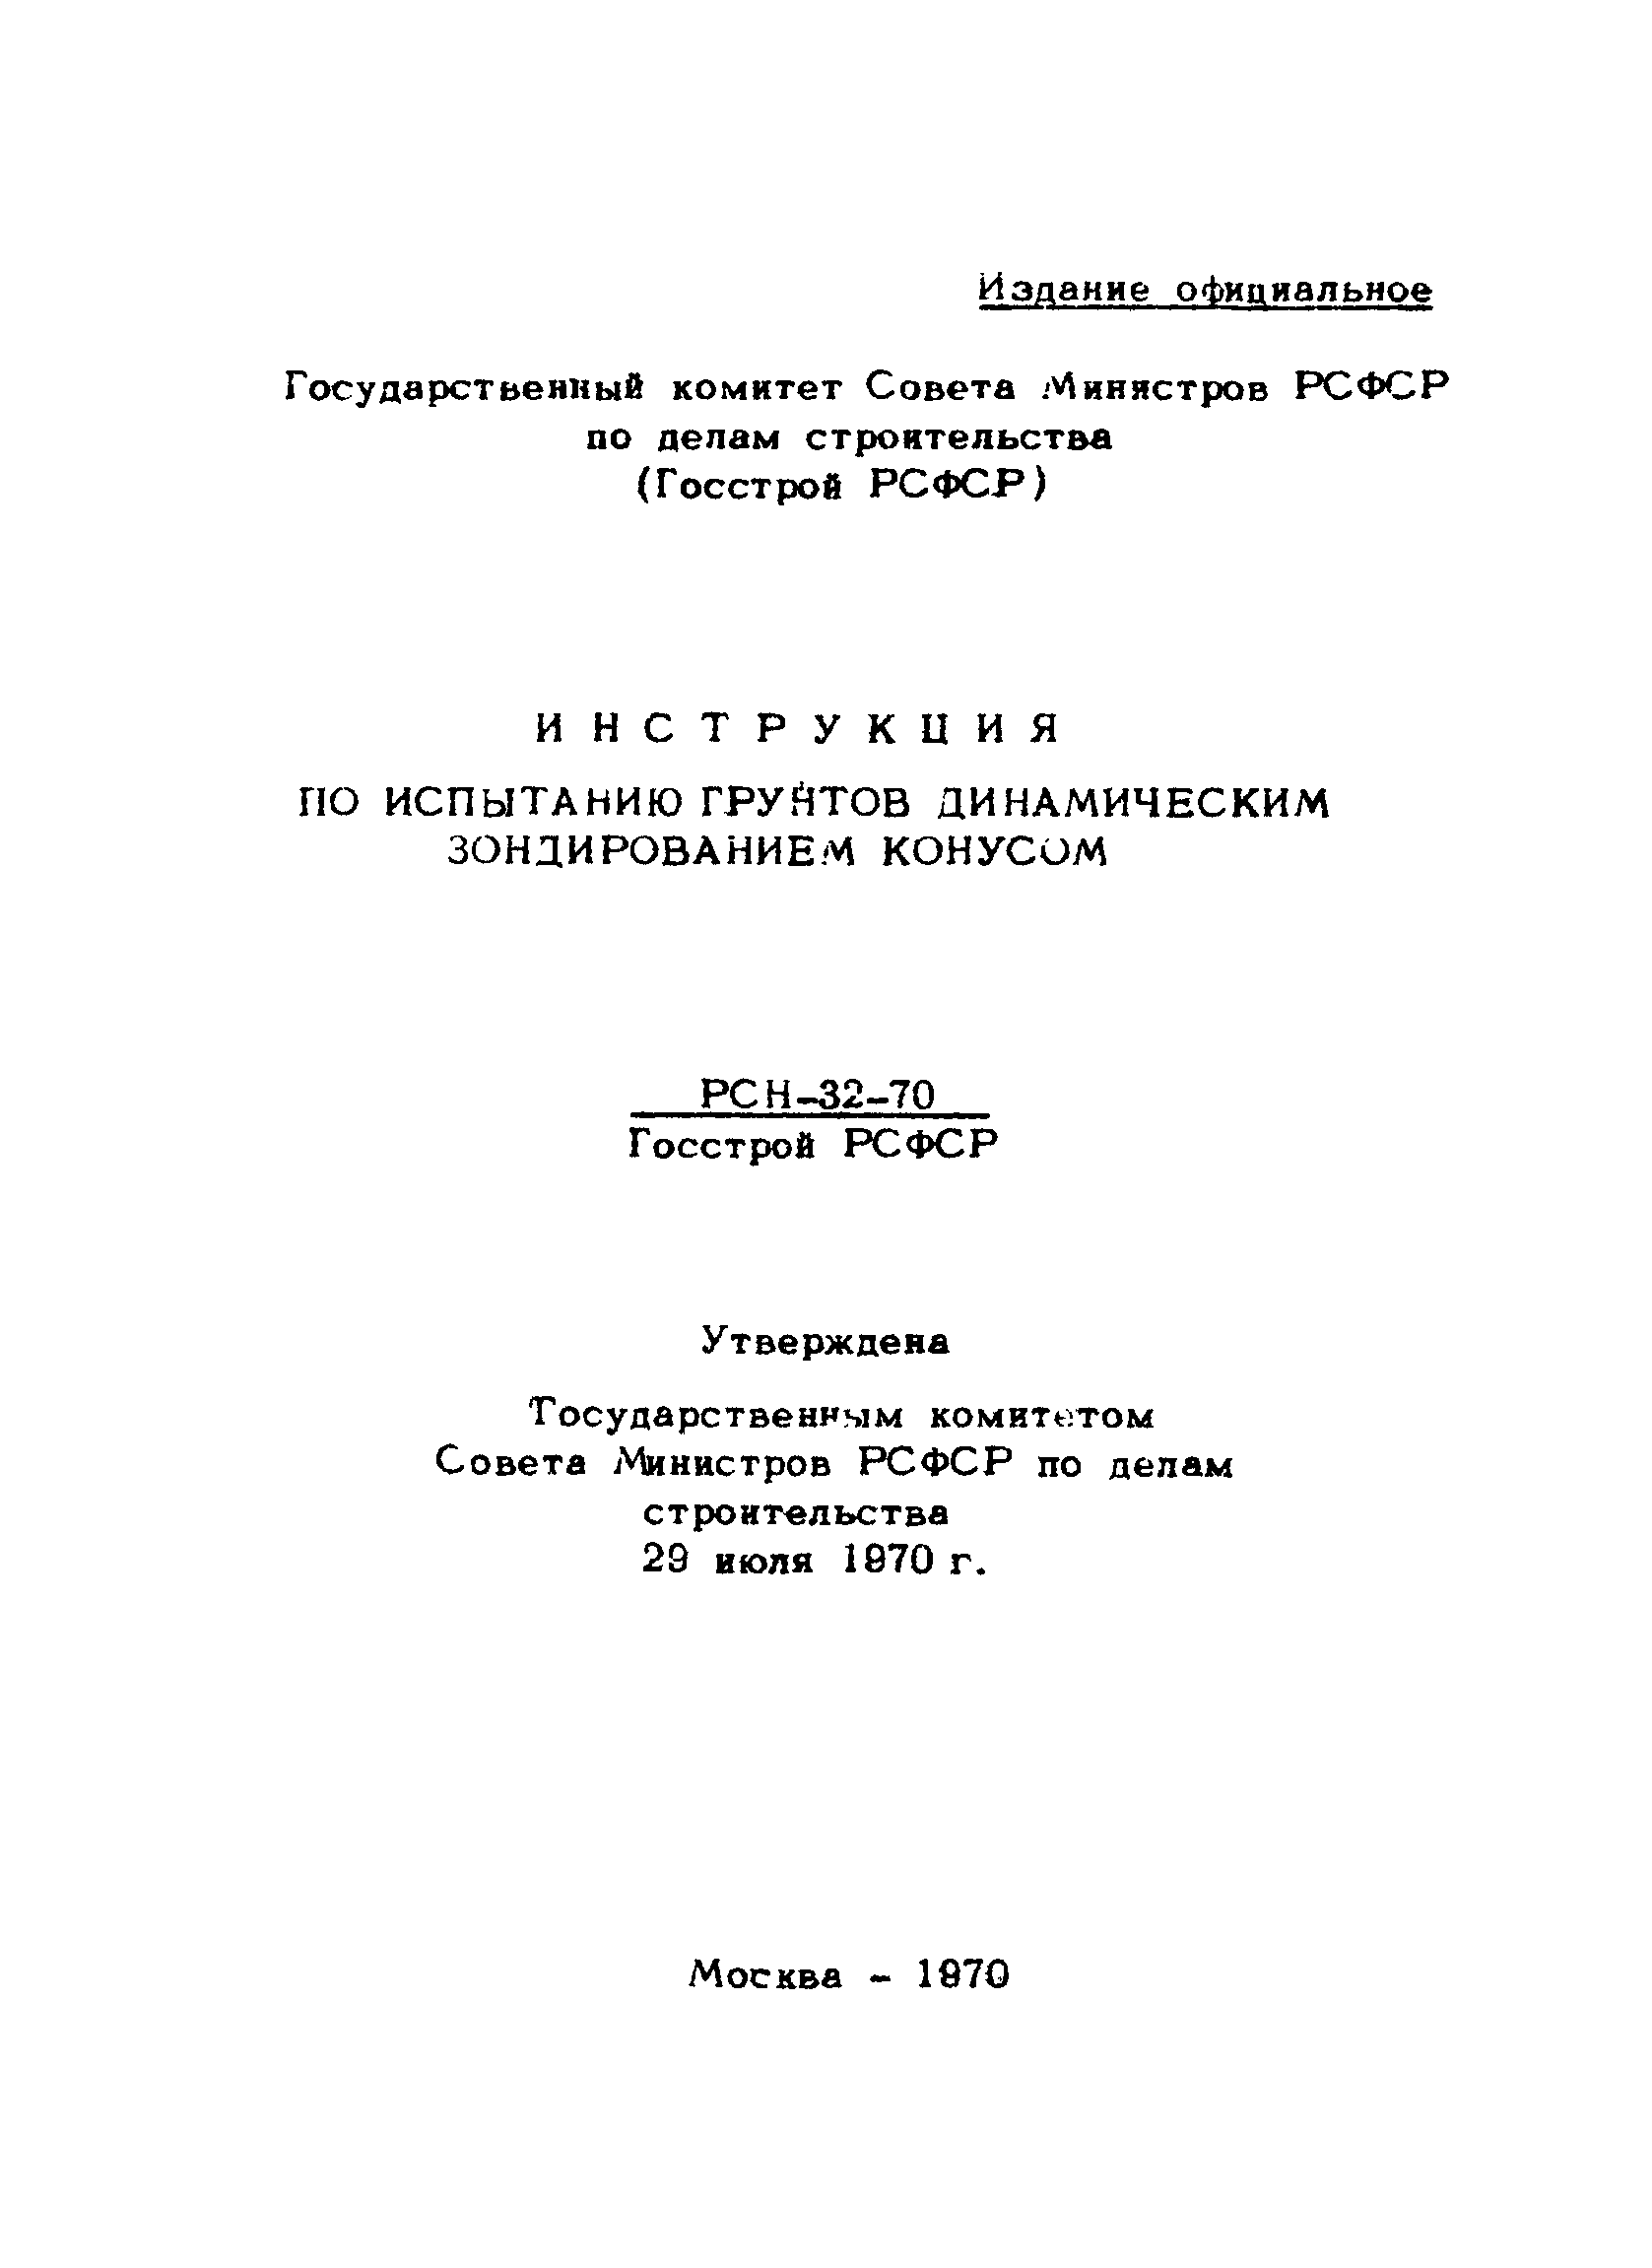 РСН 32-70/Госстрой РСФСР